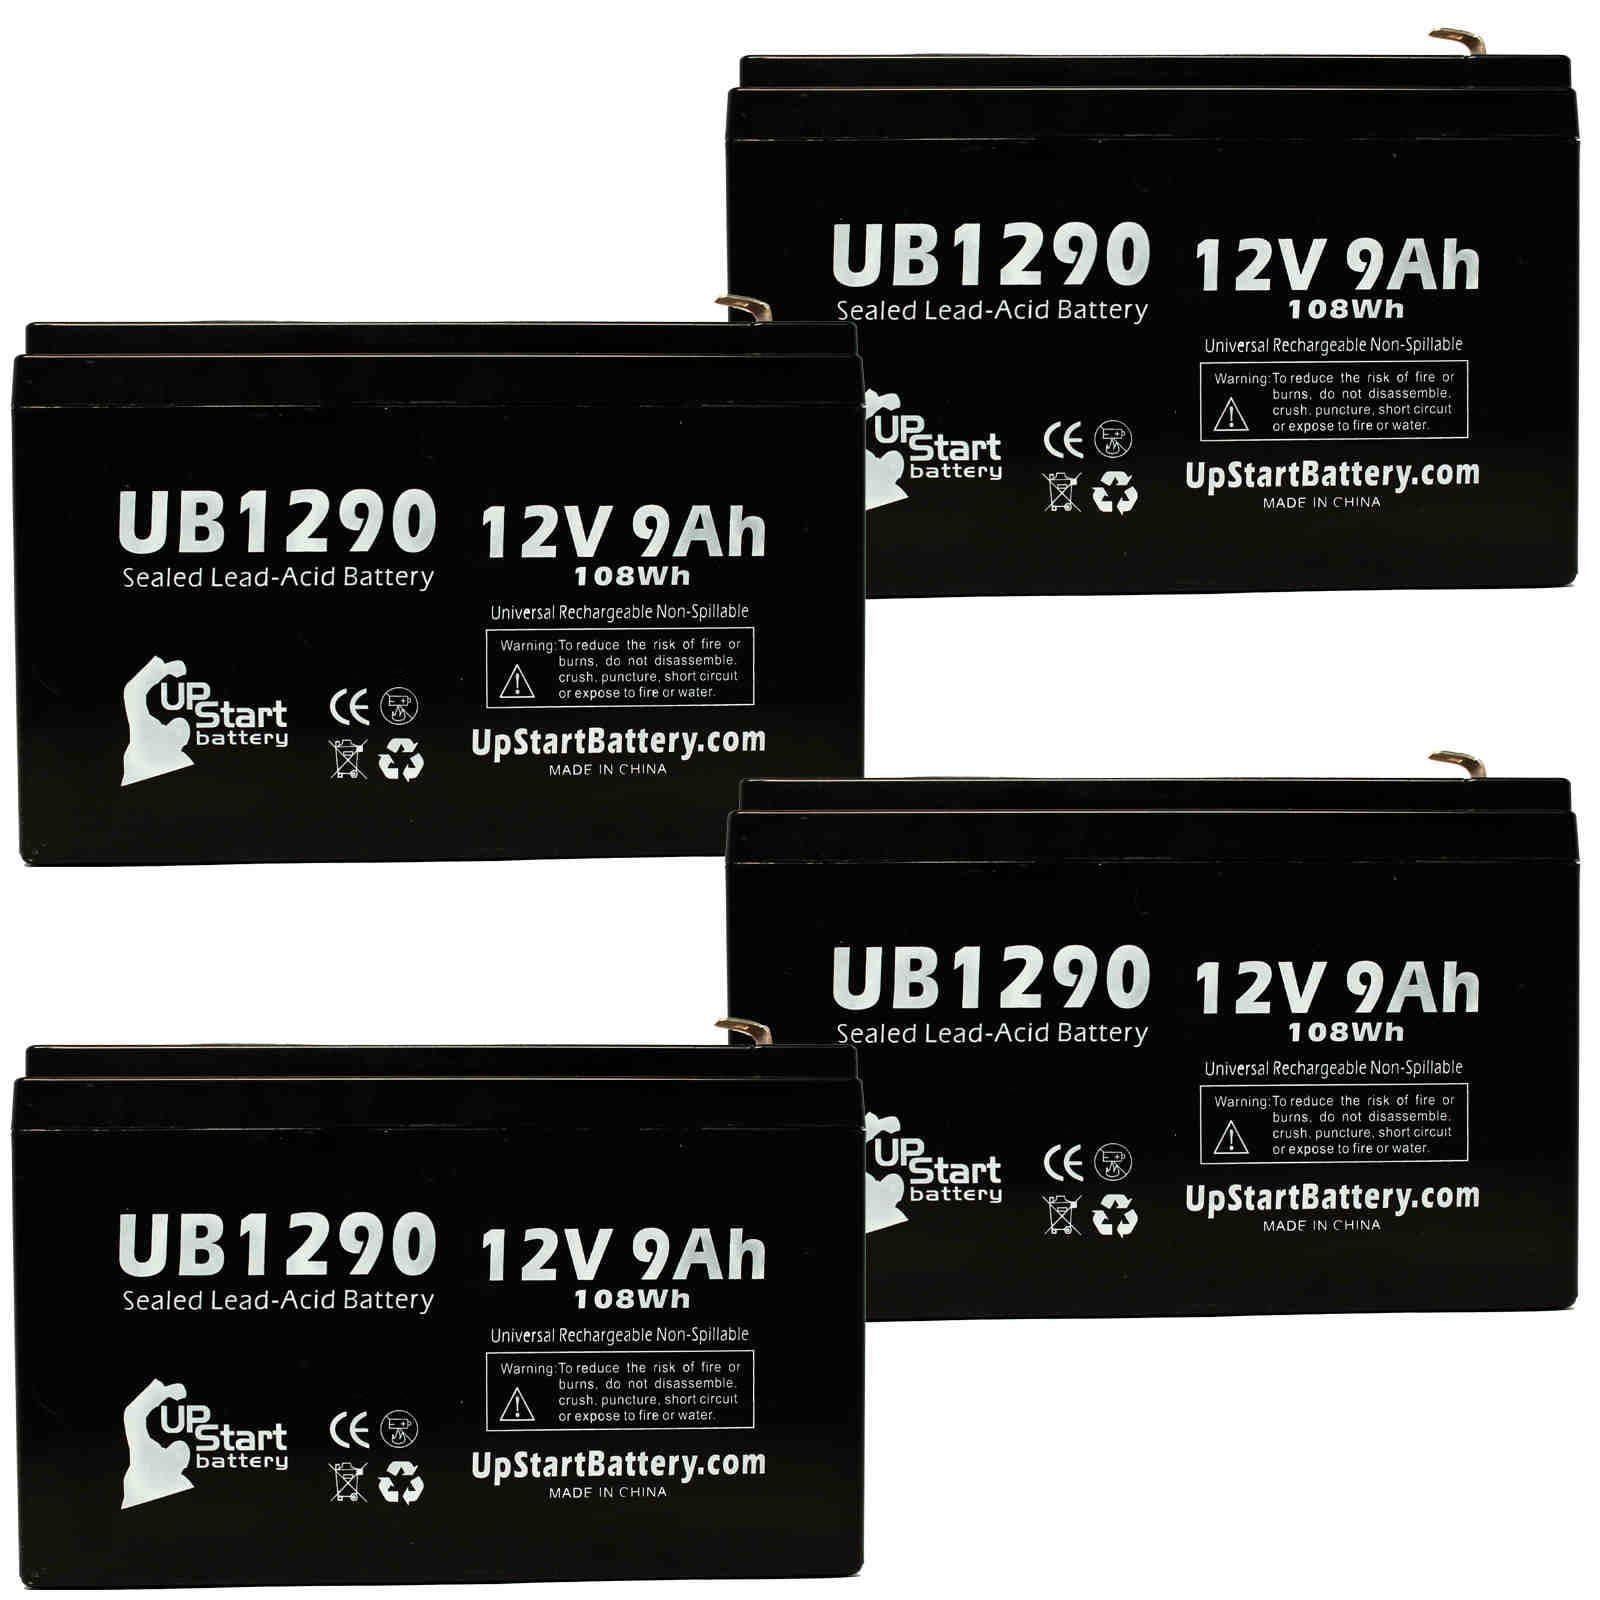 UB1290 12V 9Ah Compatible Battery for APC UPS Computer Backup Power - 2 Pack